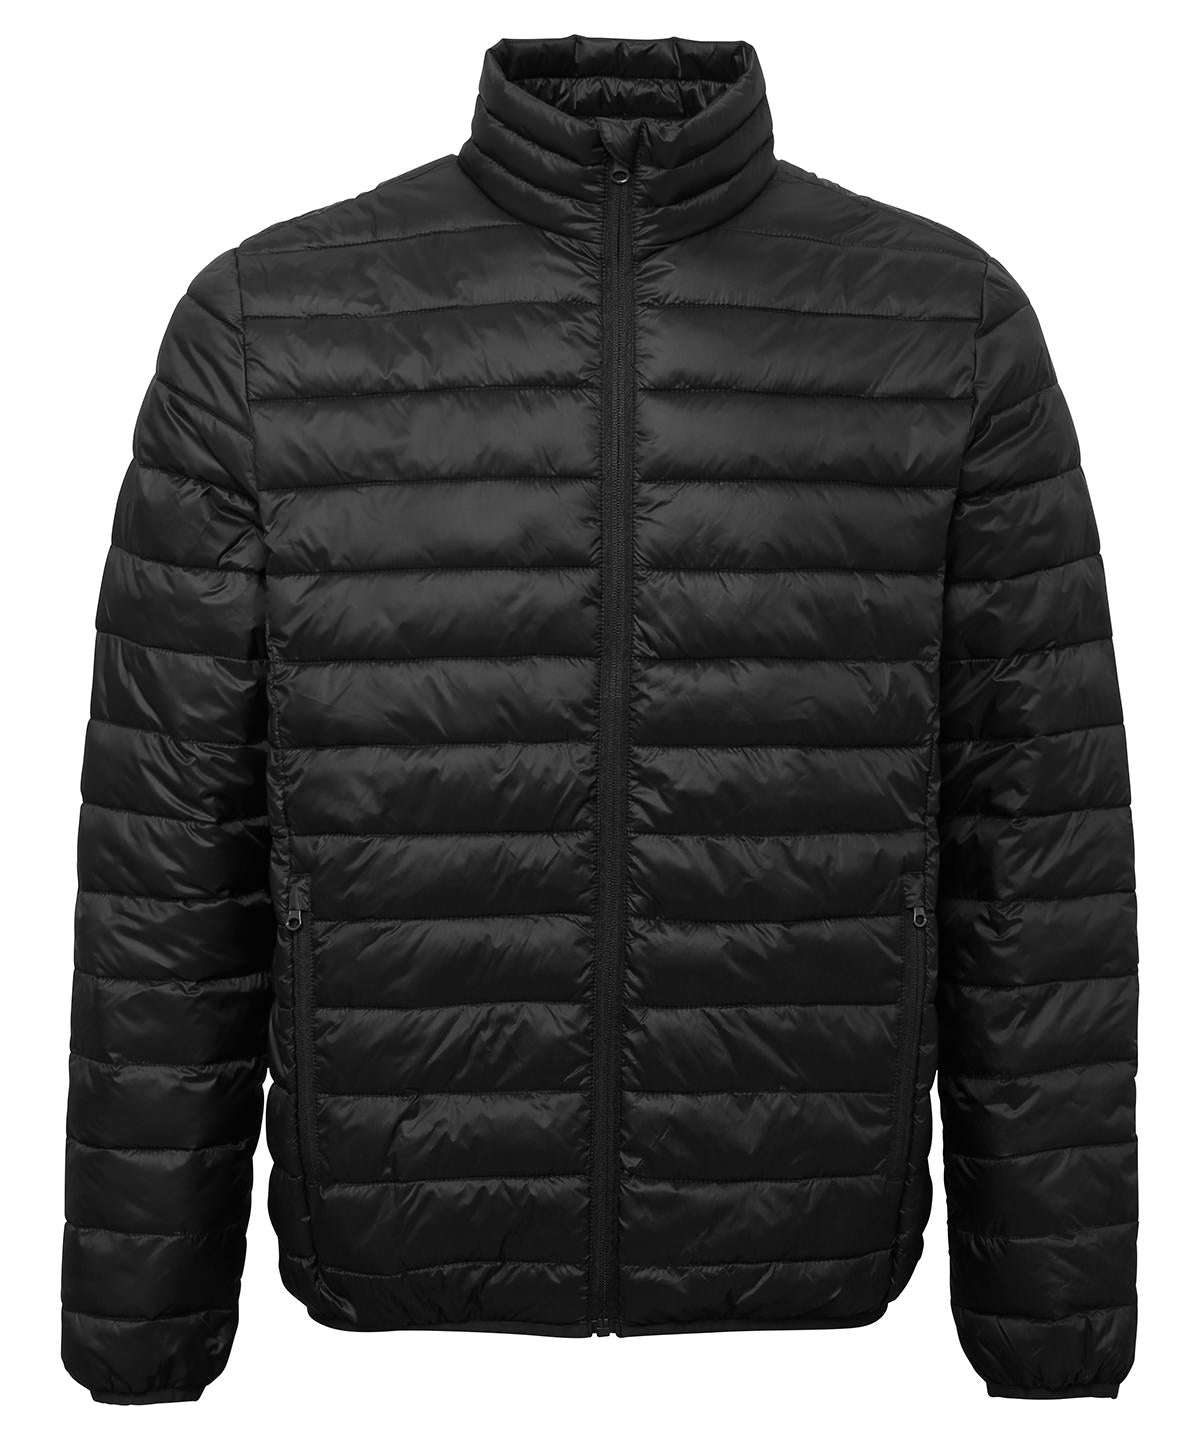 Personalised Jackets - Black 2786 Terrain padded jacket